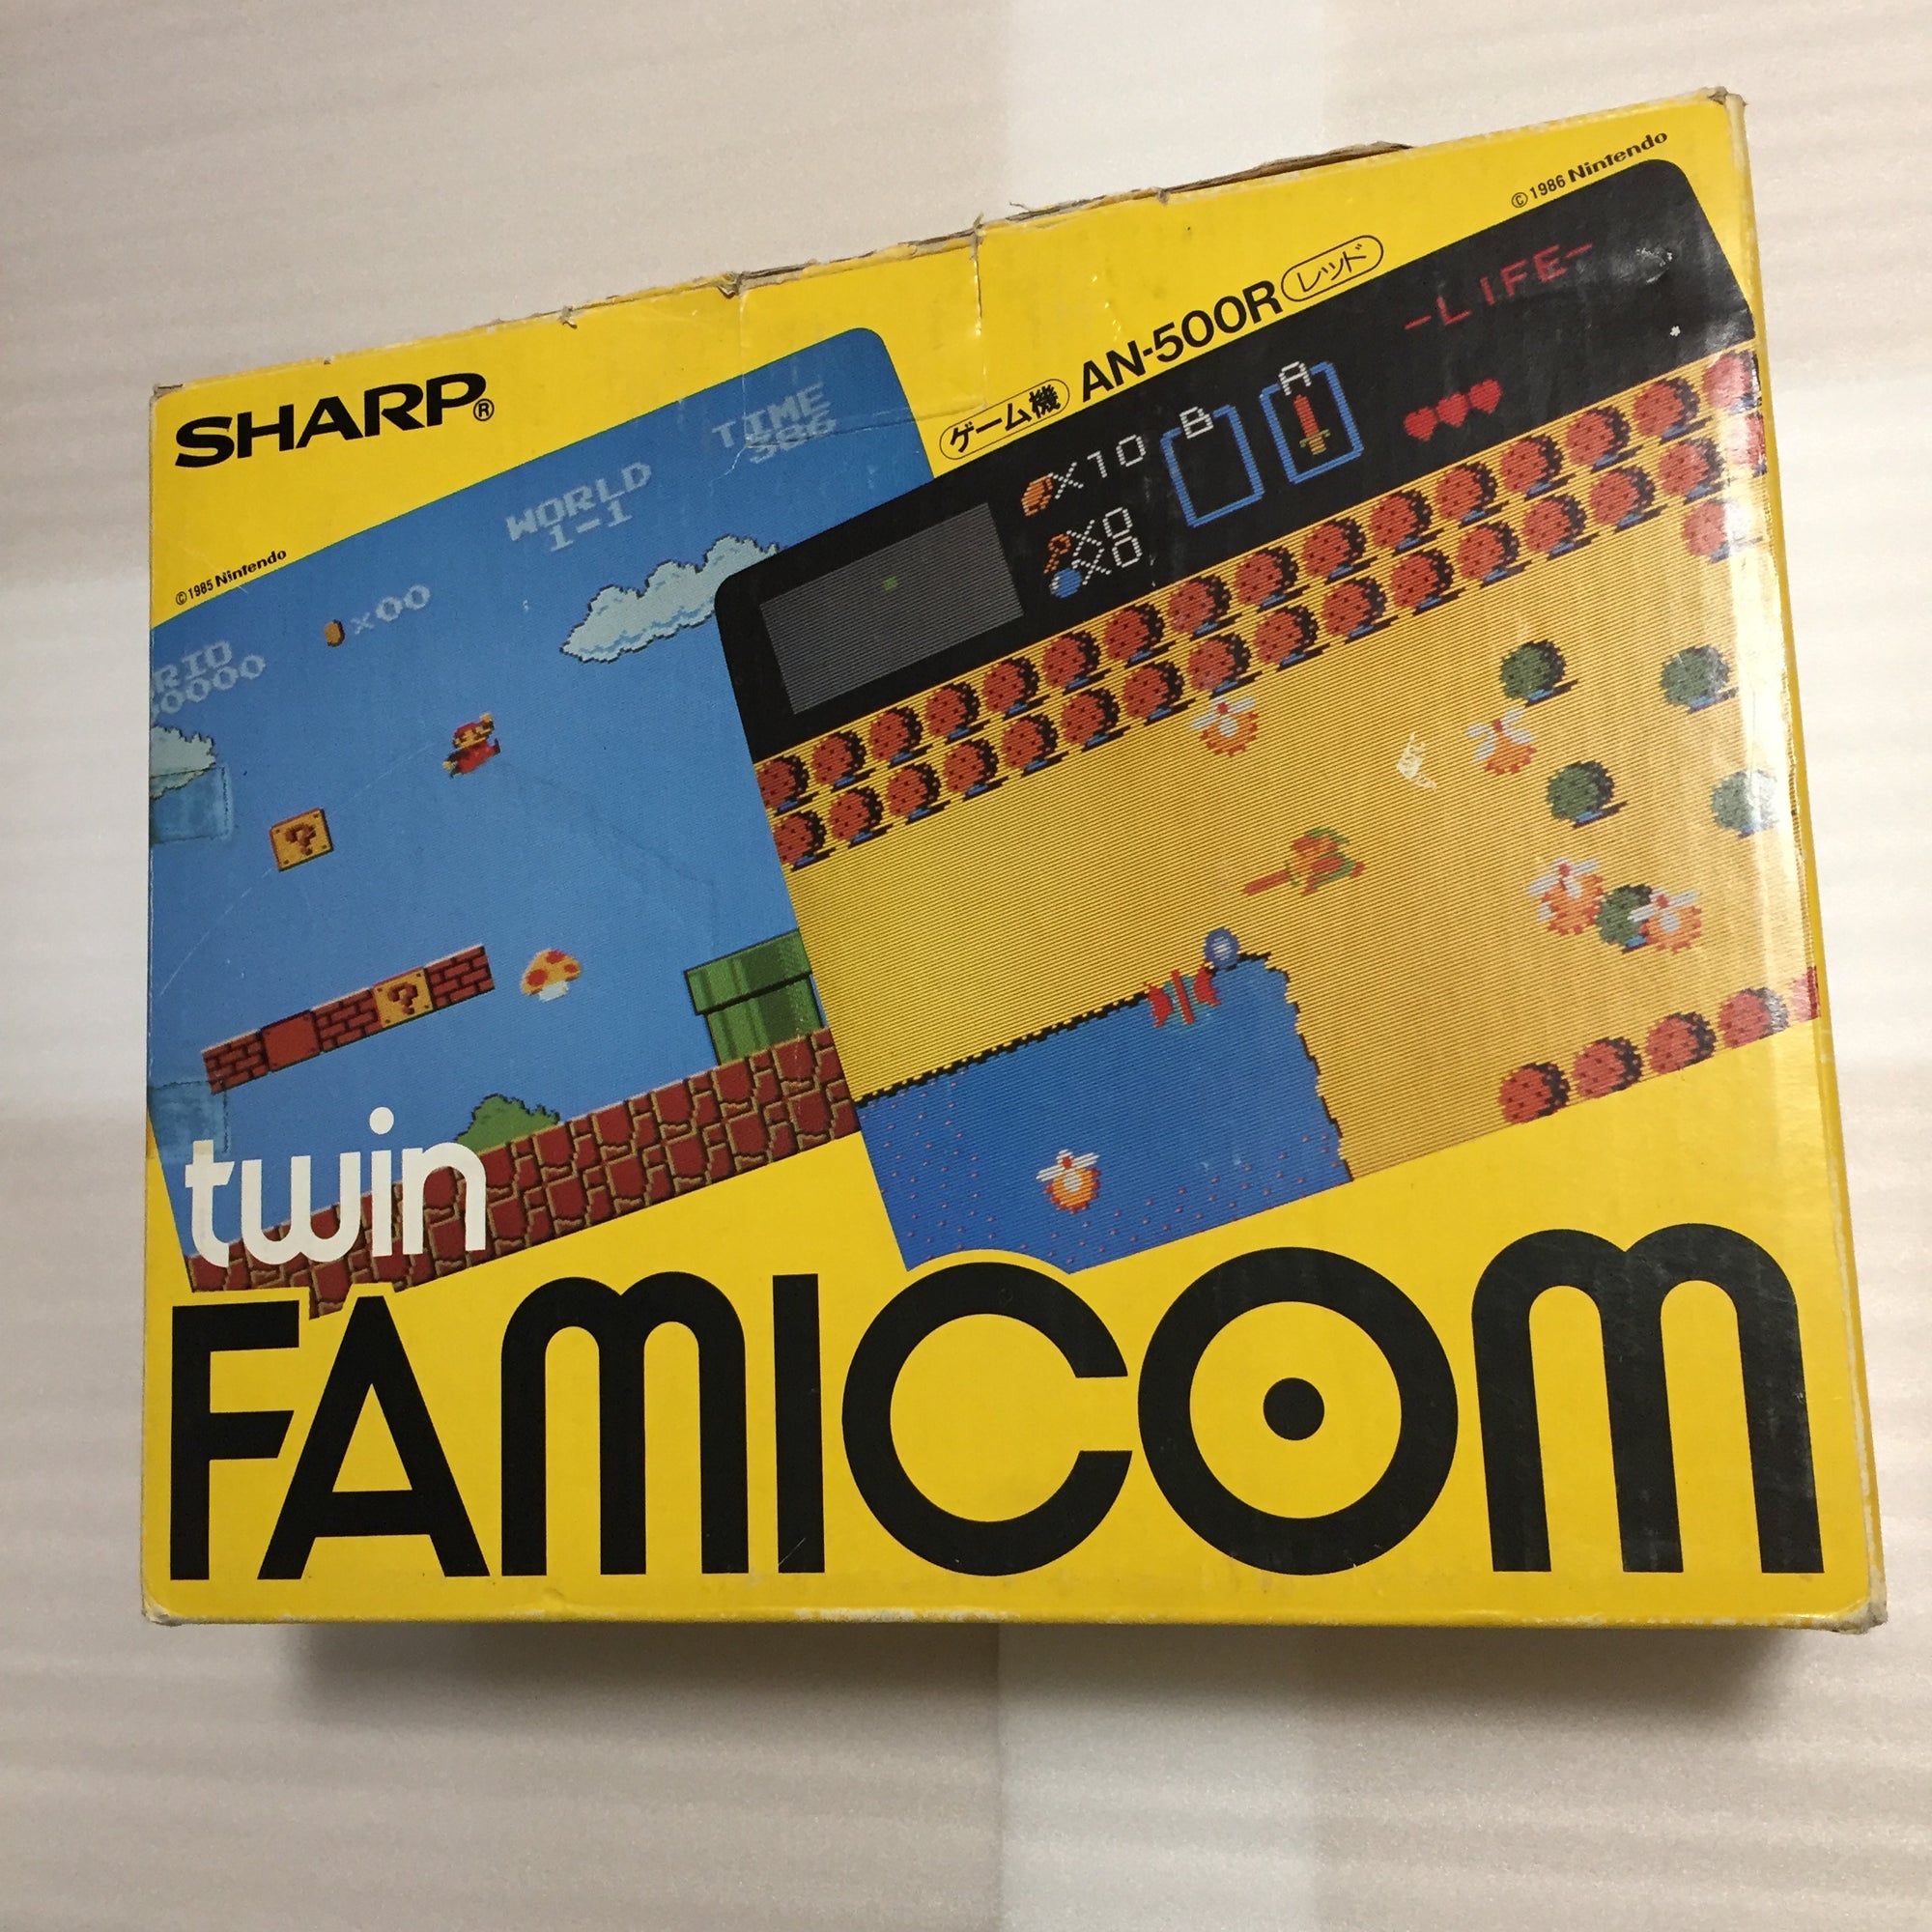 Boxed NESRGB Modded Twin Famicom set (AN-500R)